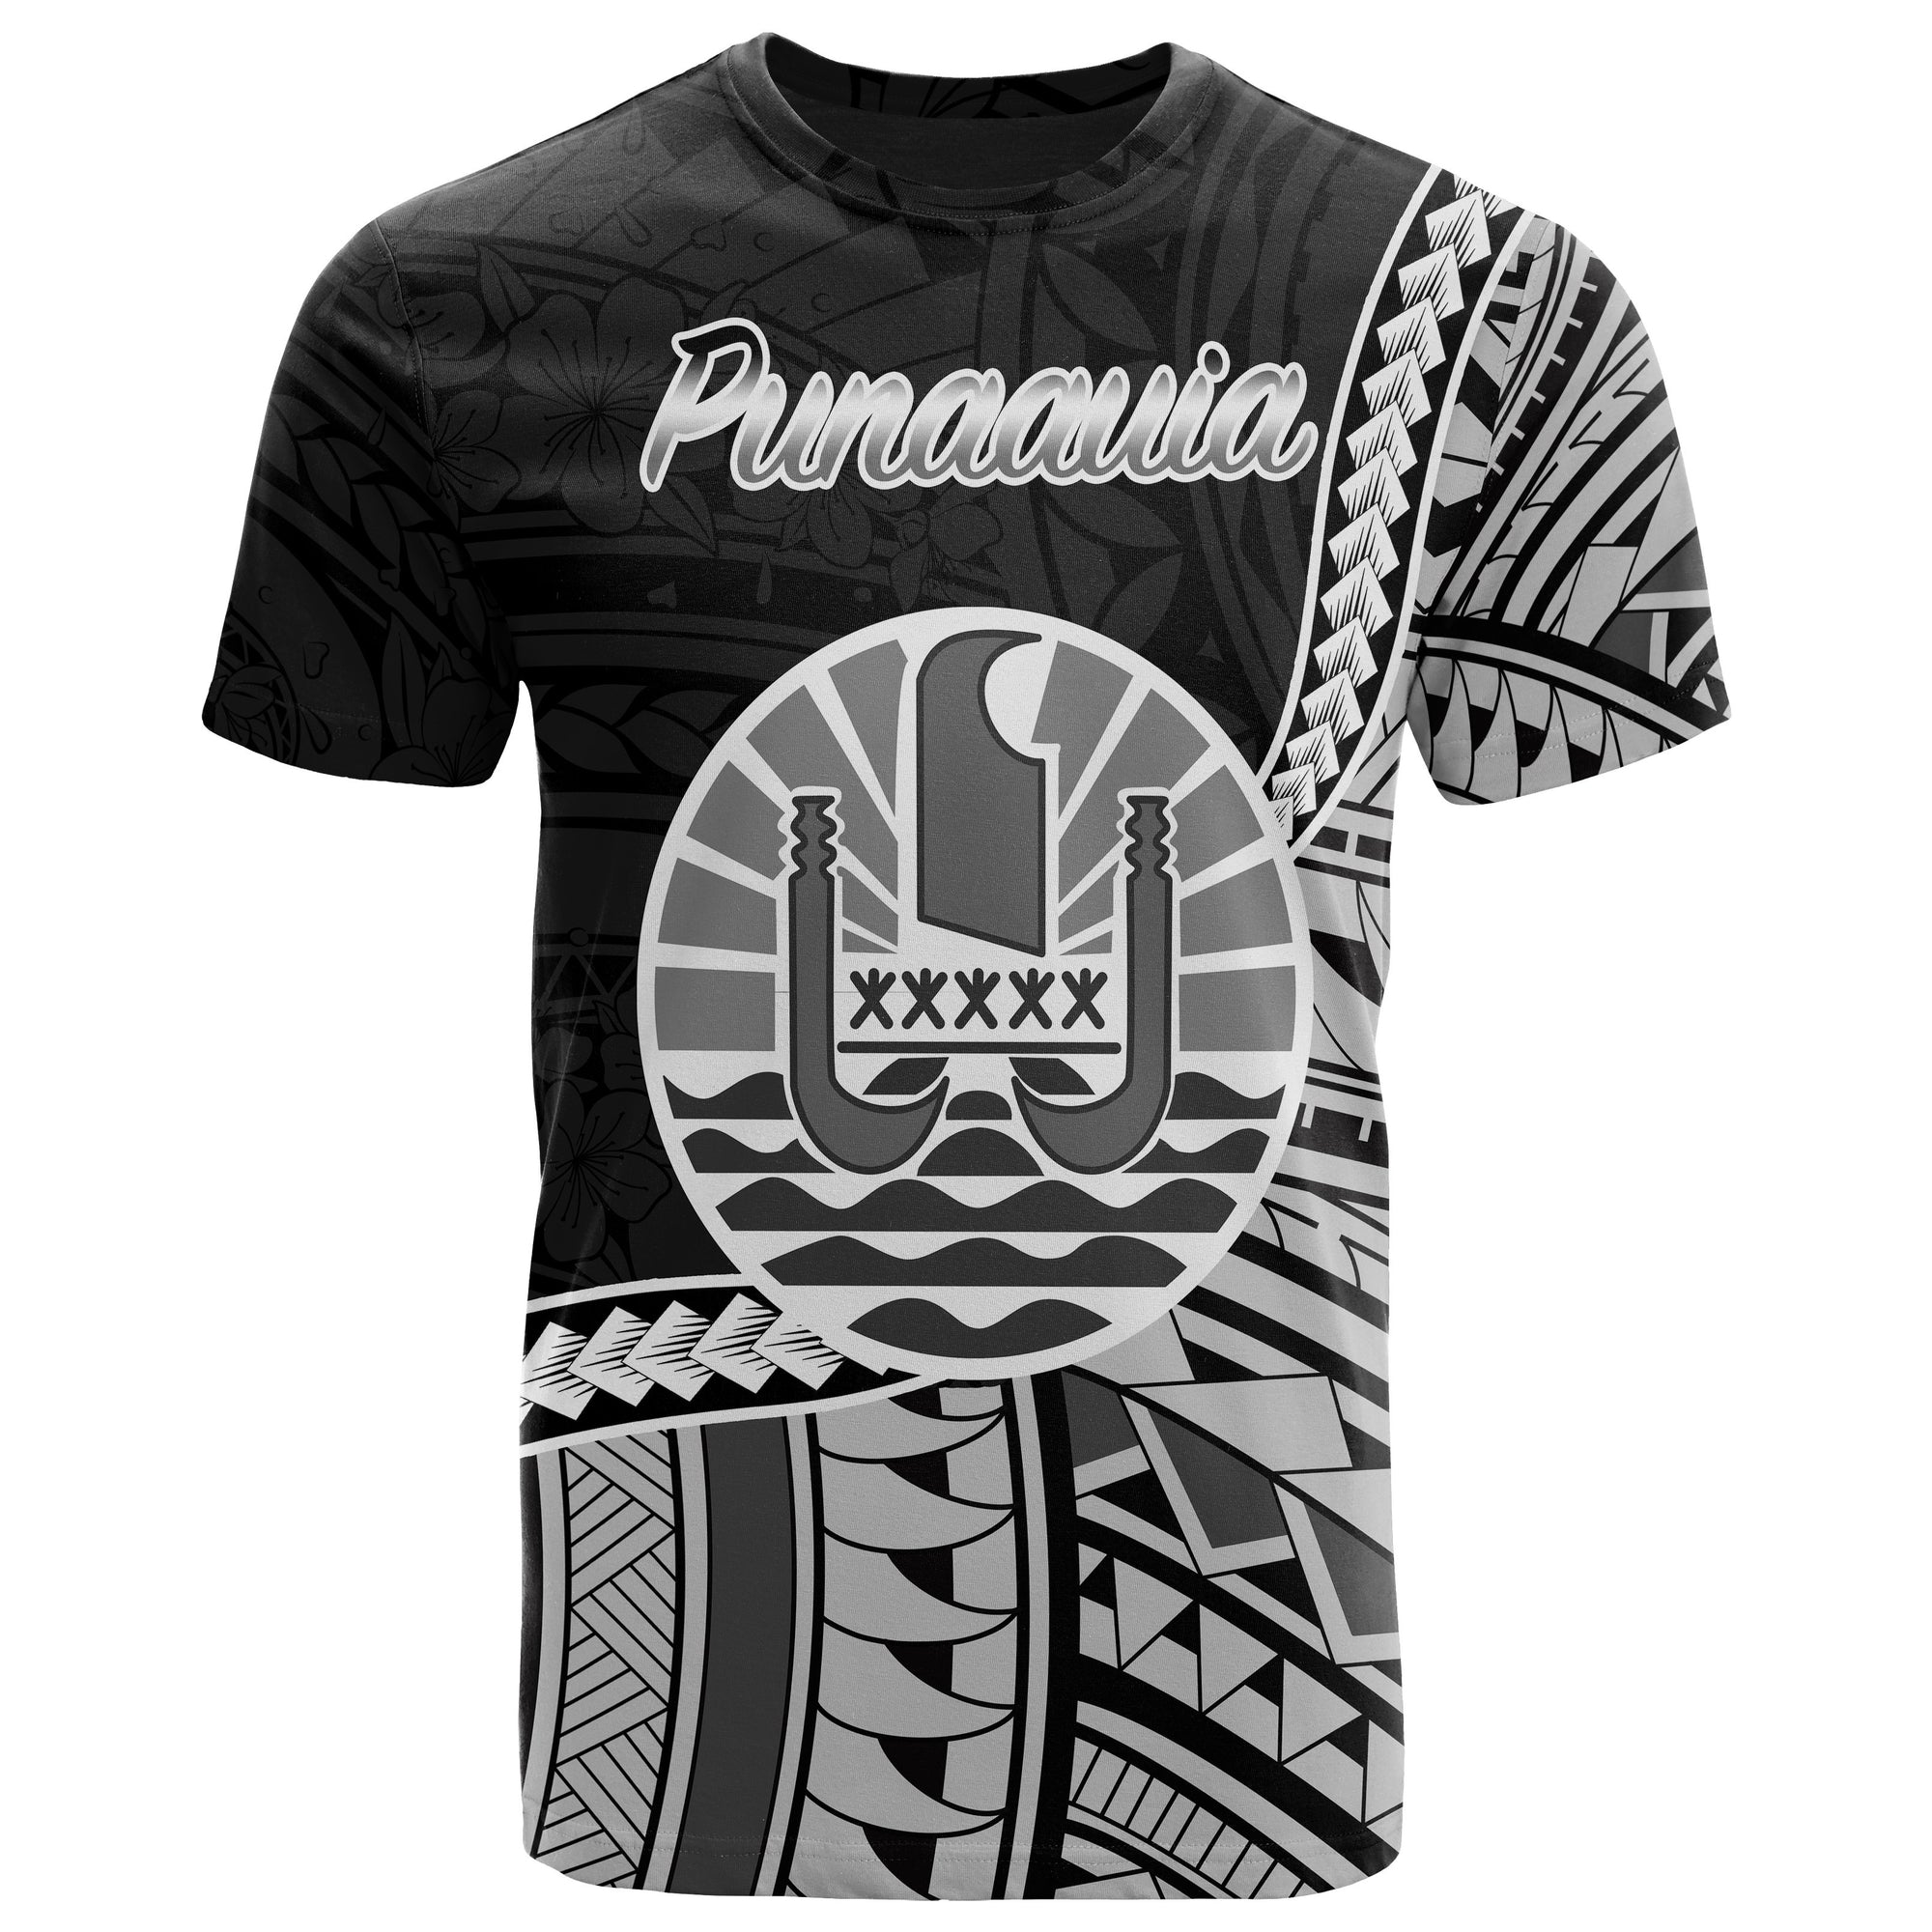 French Polynesia T Shirt Punaauia Seal of French Polynesia Polynesian Patterns Unisex Black - Polynesian Pride